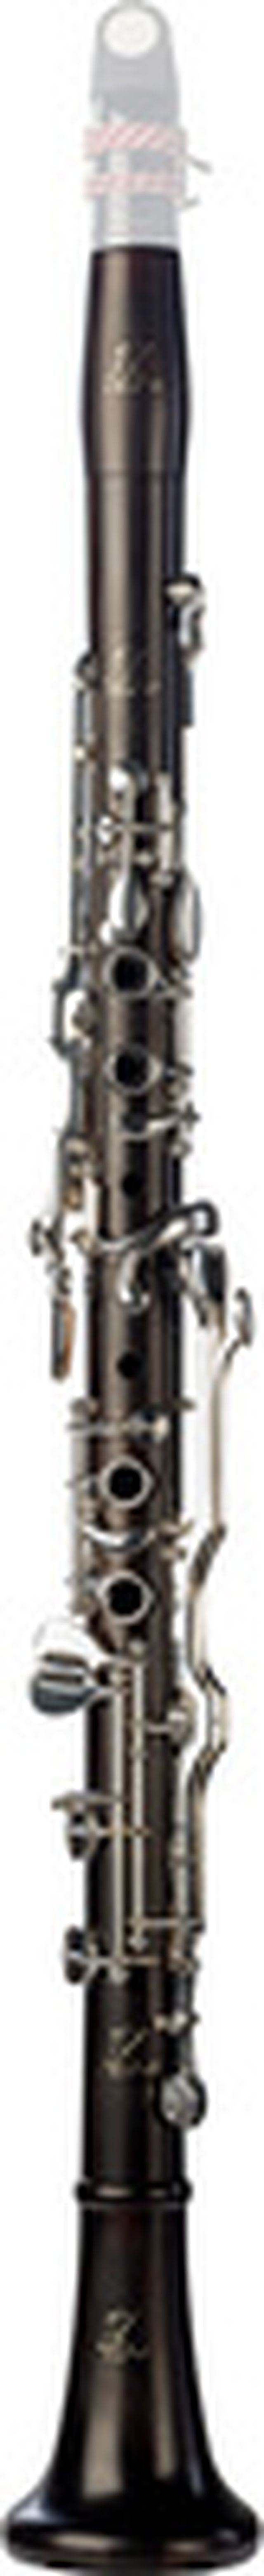 RZ Clarinets G-Clarinet Professional